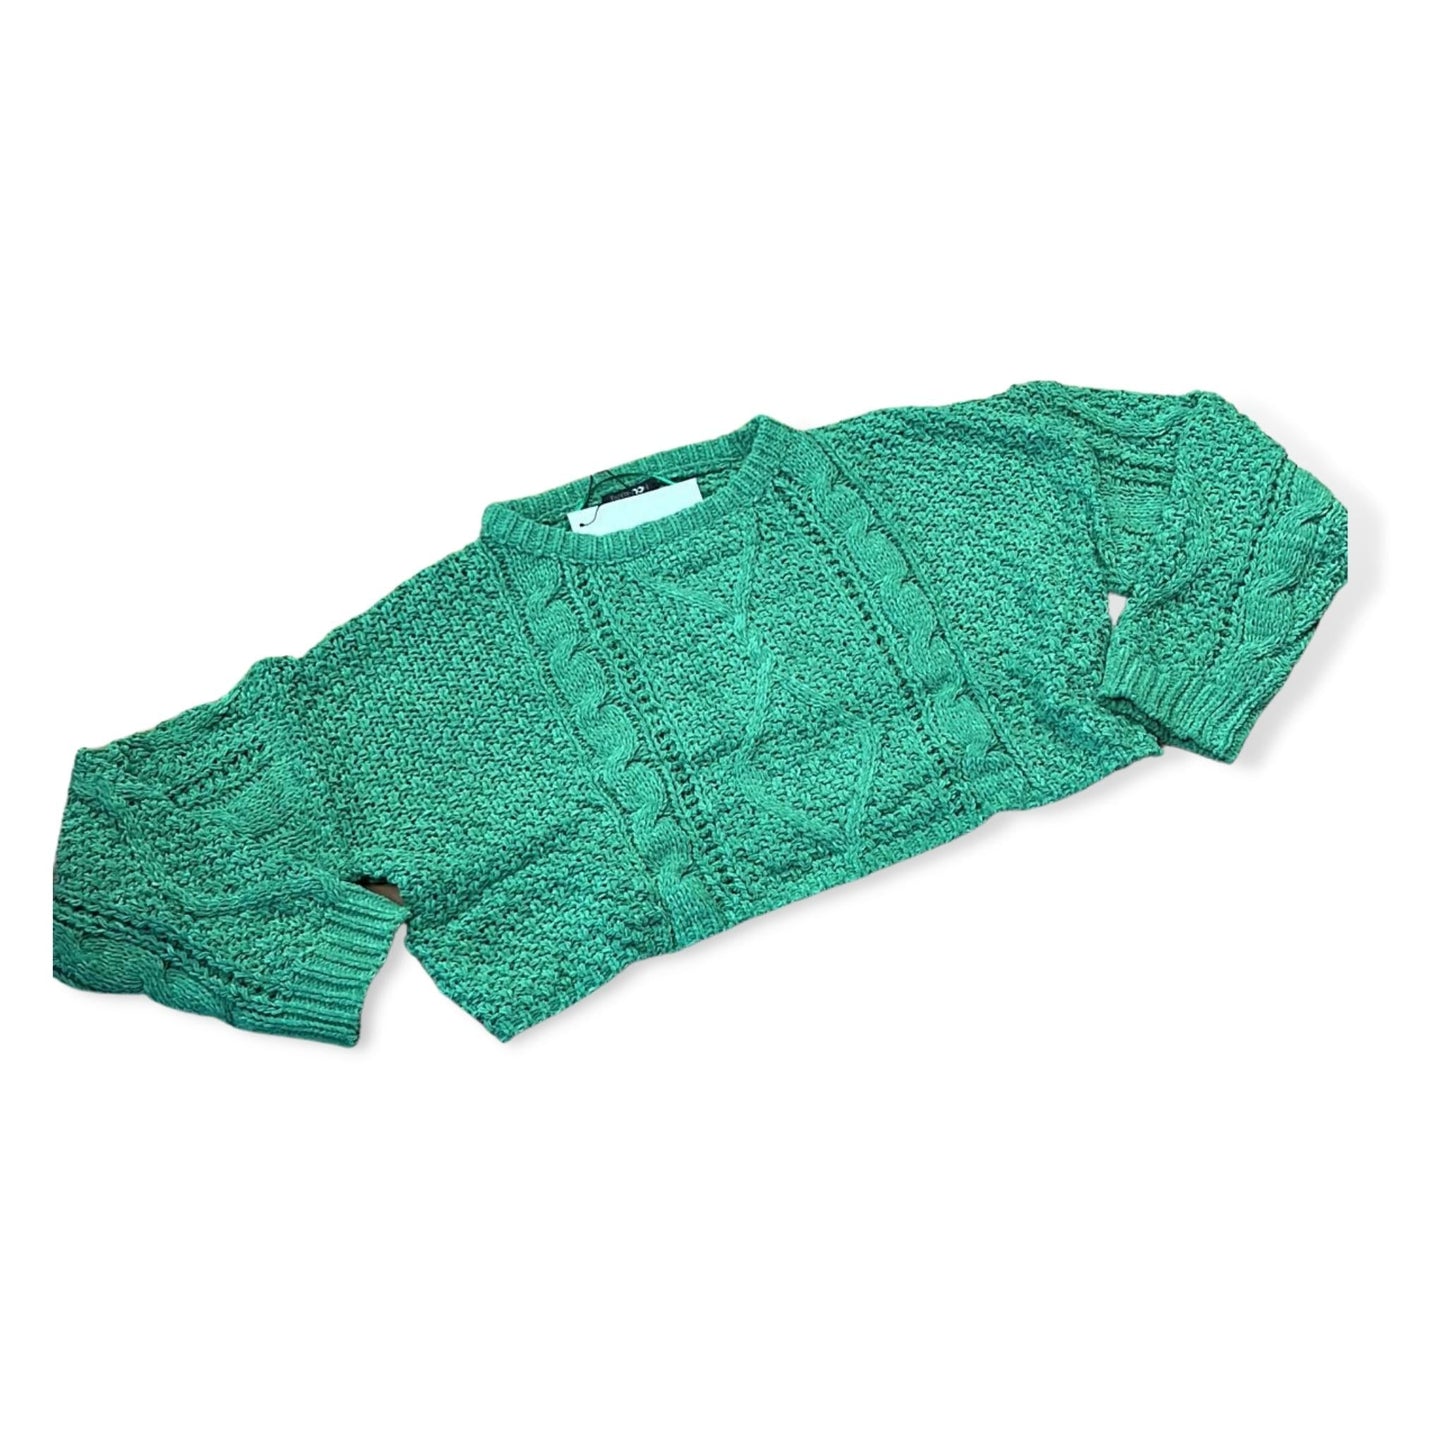 Papermoon Green Cora Cable Knit Pullover - a Spirit Animal - Pullover $30-$60 active Nov 2022 Color-Green